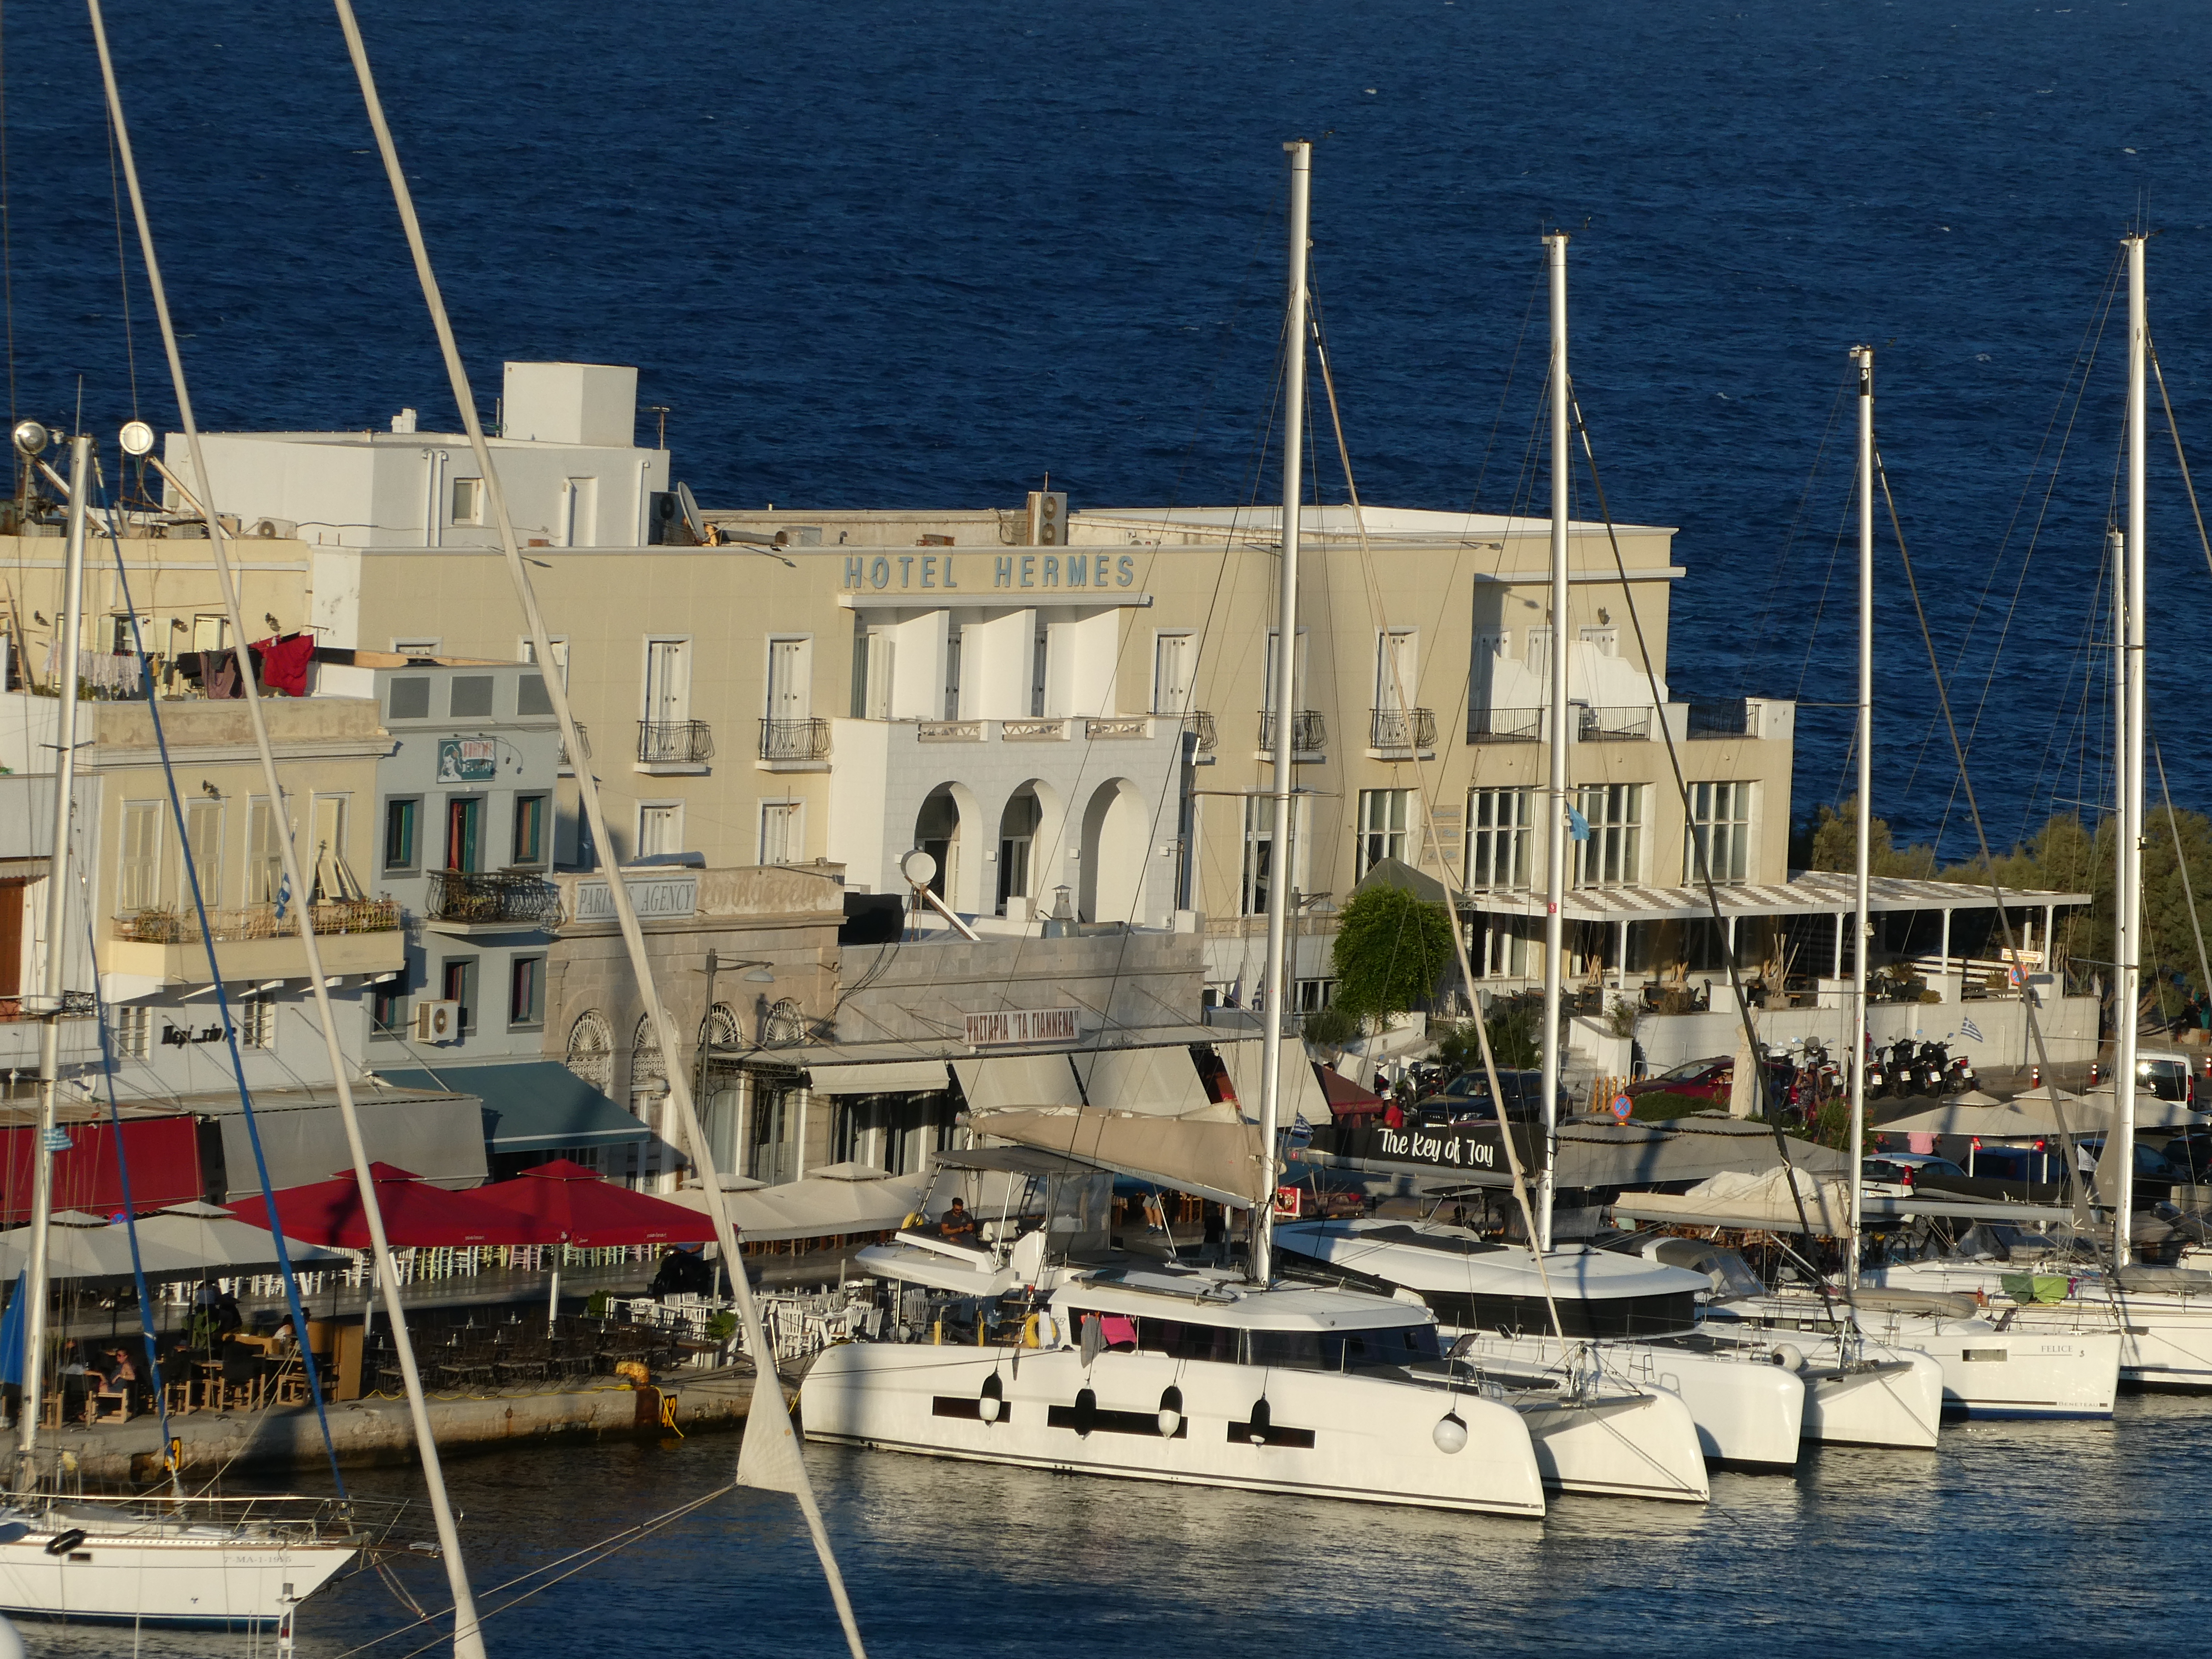 Hotel Hermes, Ermoupoli, Syros